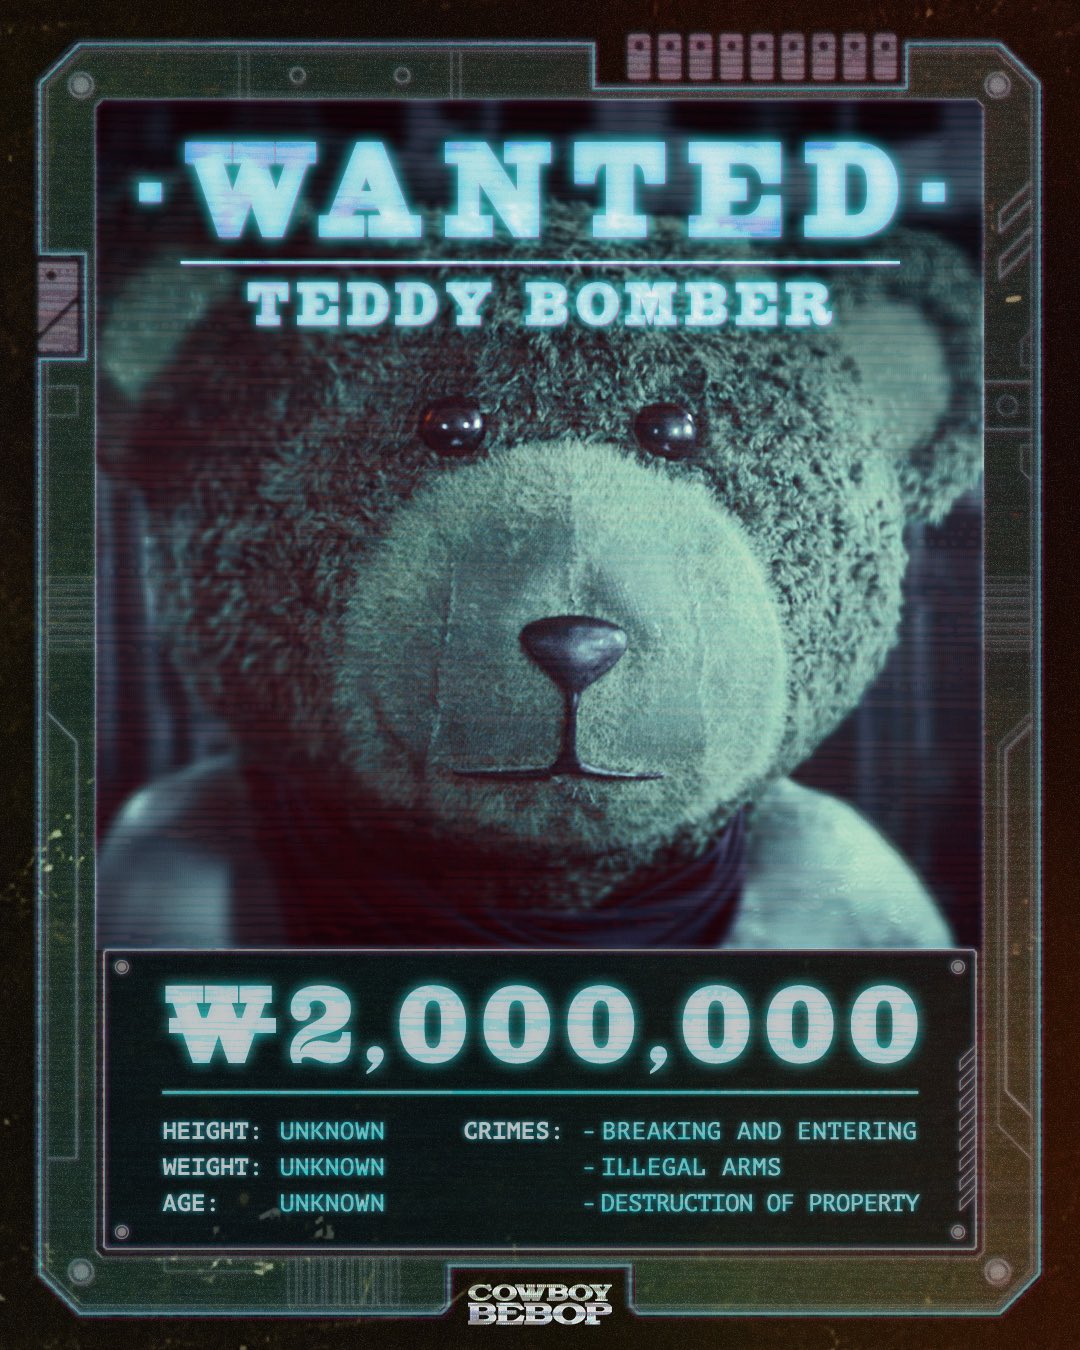 Teddy Bomber